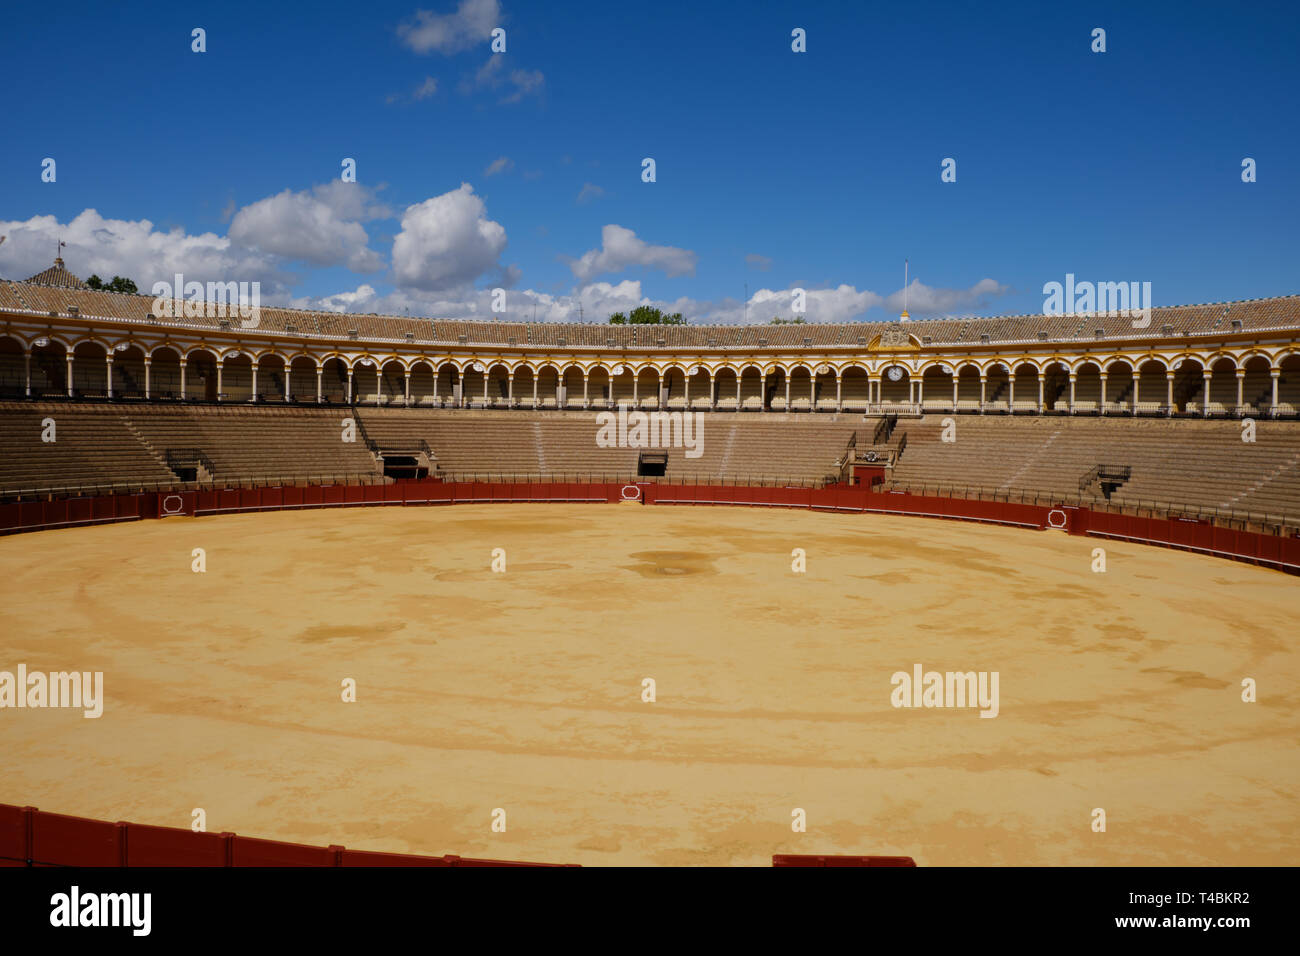 April 2019 Bullfighting arena (plaza de toros) in Seville, Real Maestranza de Caballeria de Sevilla, Spain Stock Photo